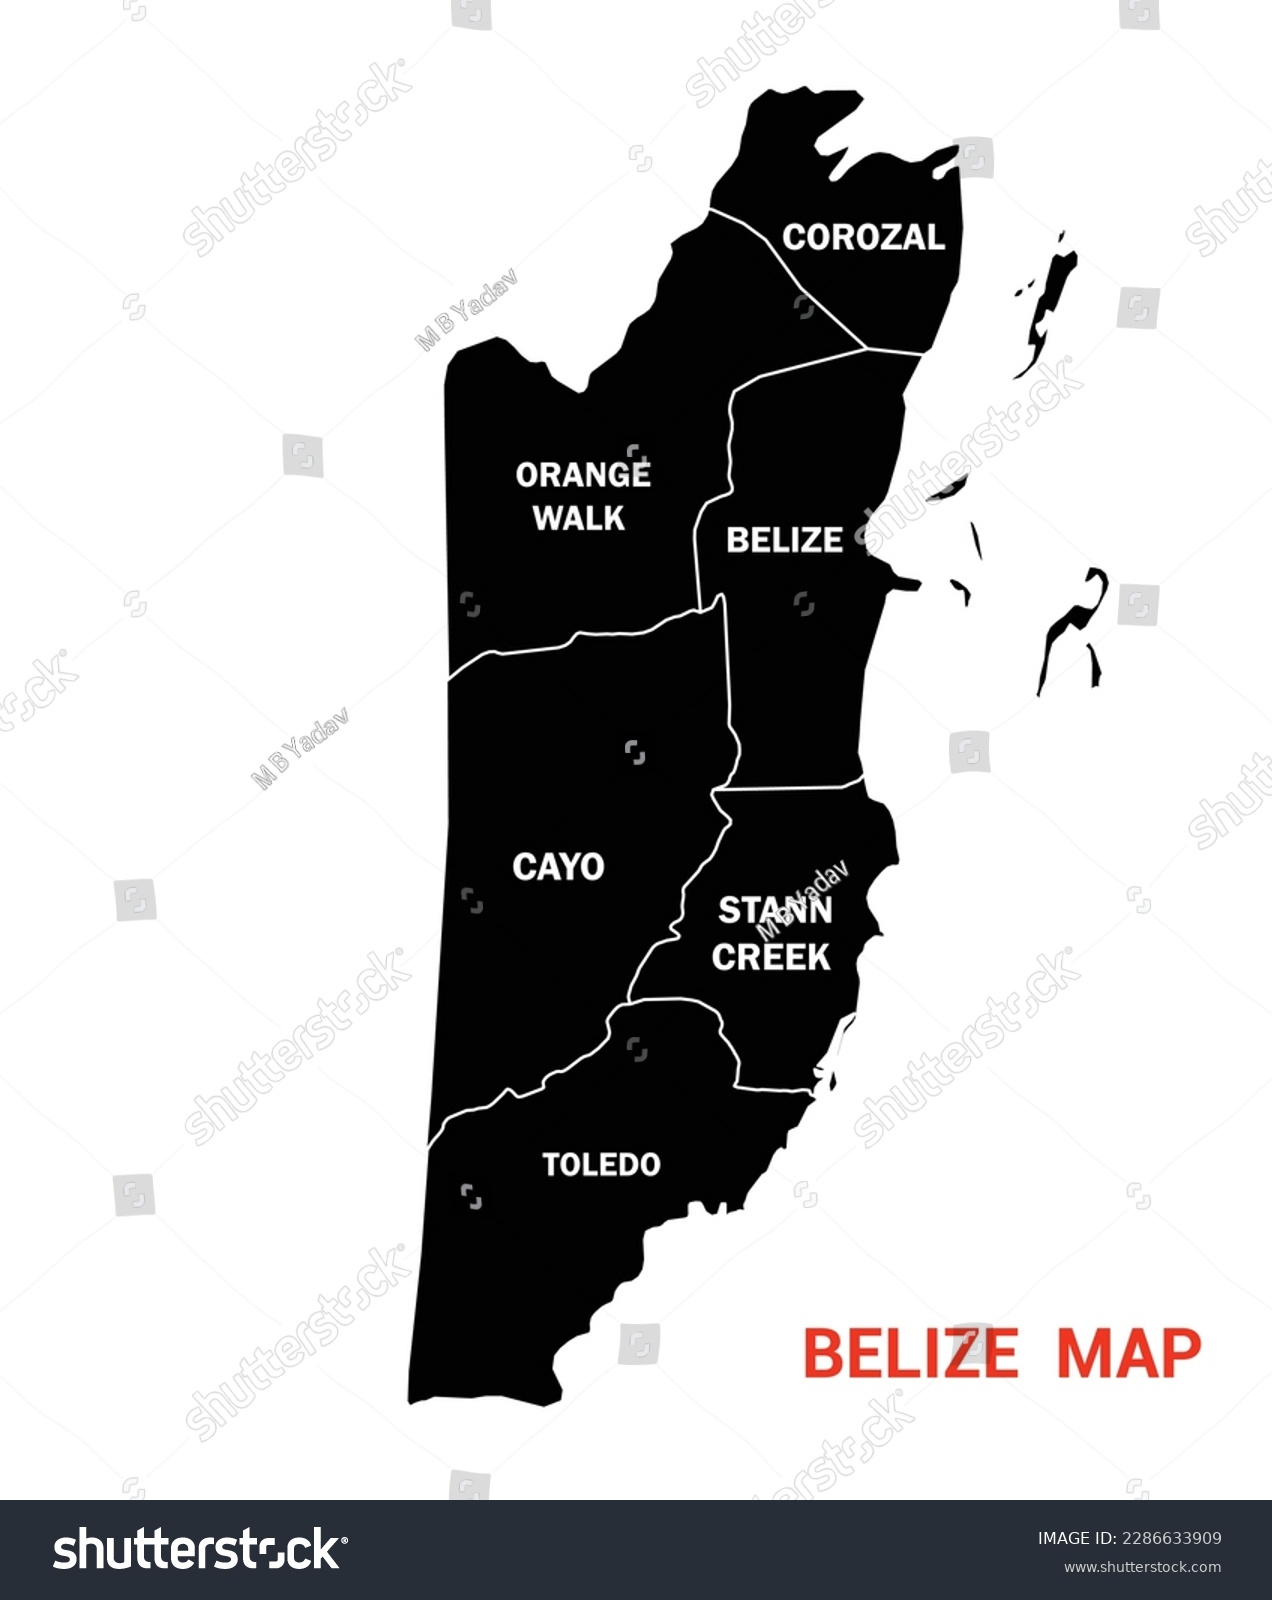 SVG of Map of Belize, Map of Belize Solid color, Map of Belize states Vector Illustration, Map of Belize with district name svg